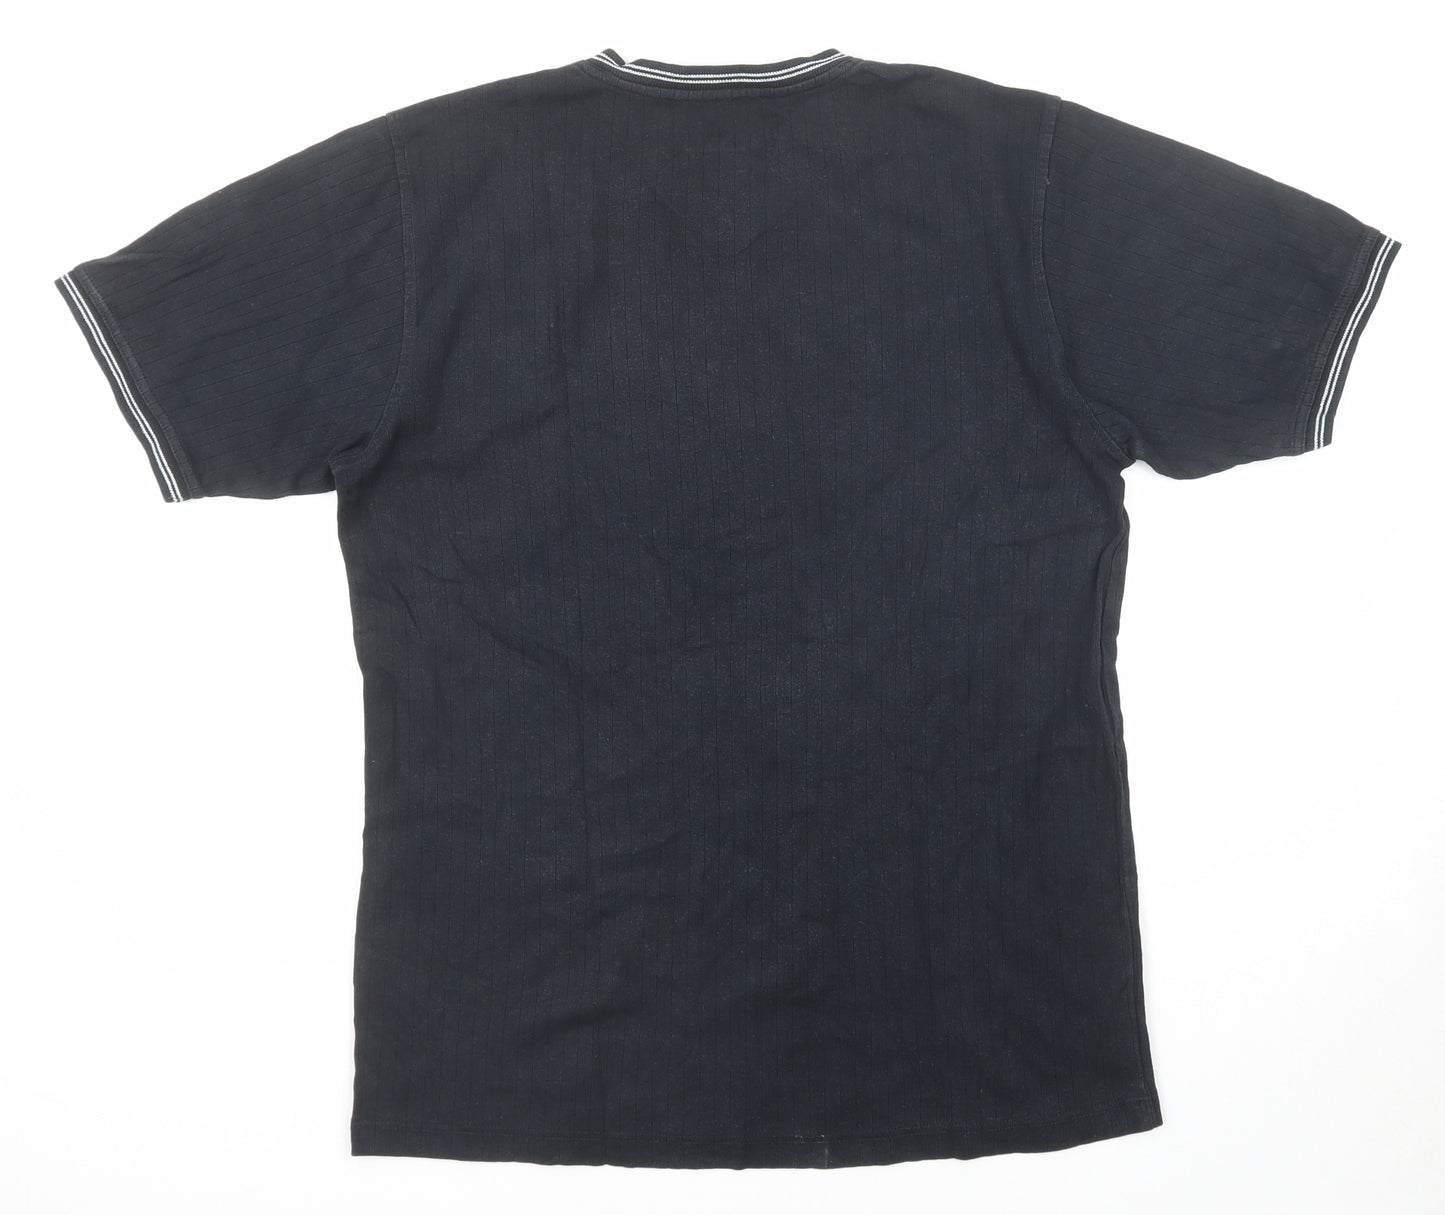 NEXT Mens Black Cotton T-Shirt Size S V-Neck